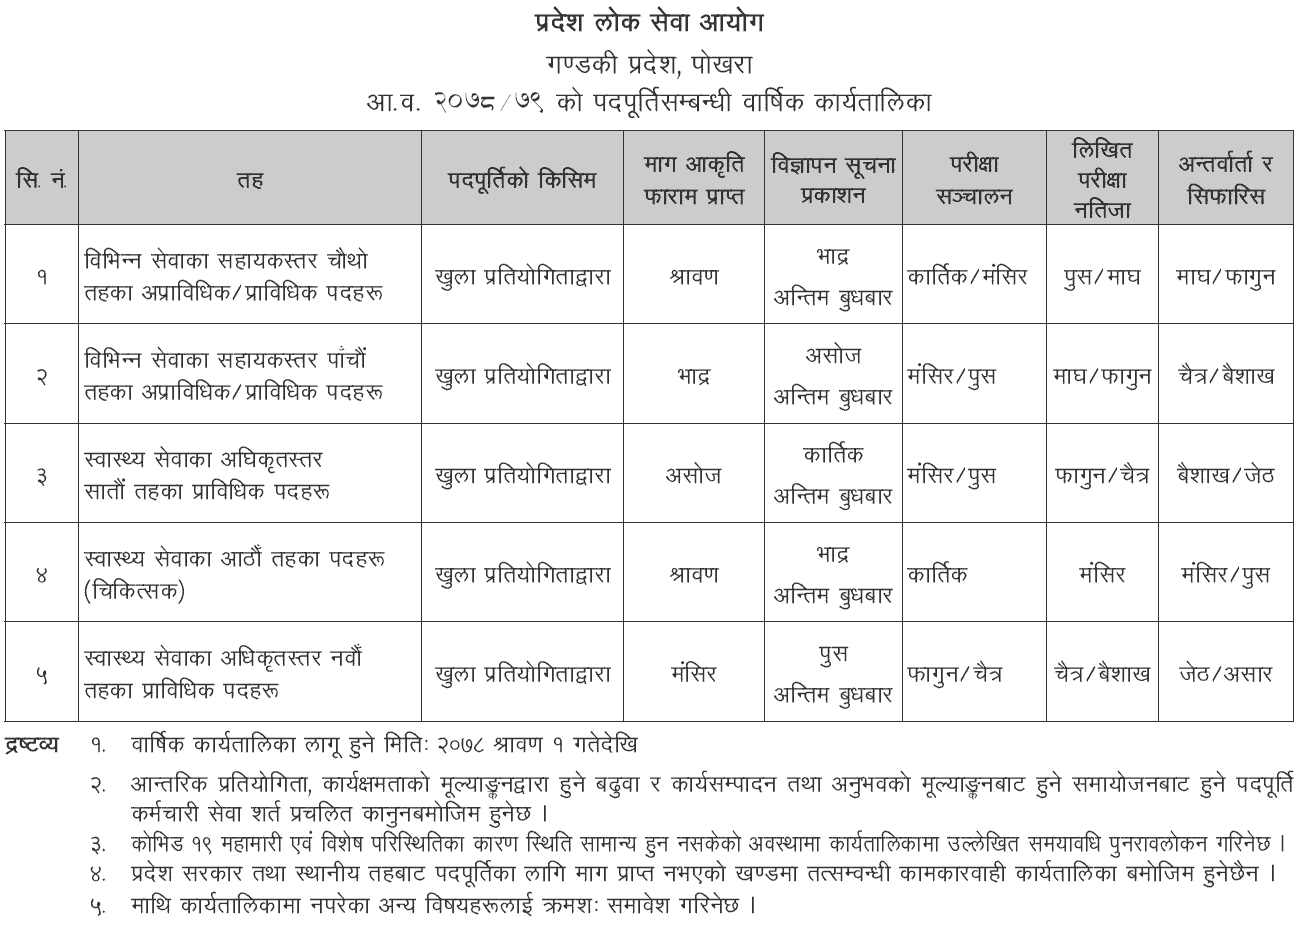 Gandaki Pradesh Lok Sewa Aayog Vacancy Yearly Calendar 2078-79